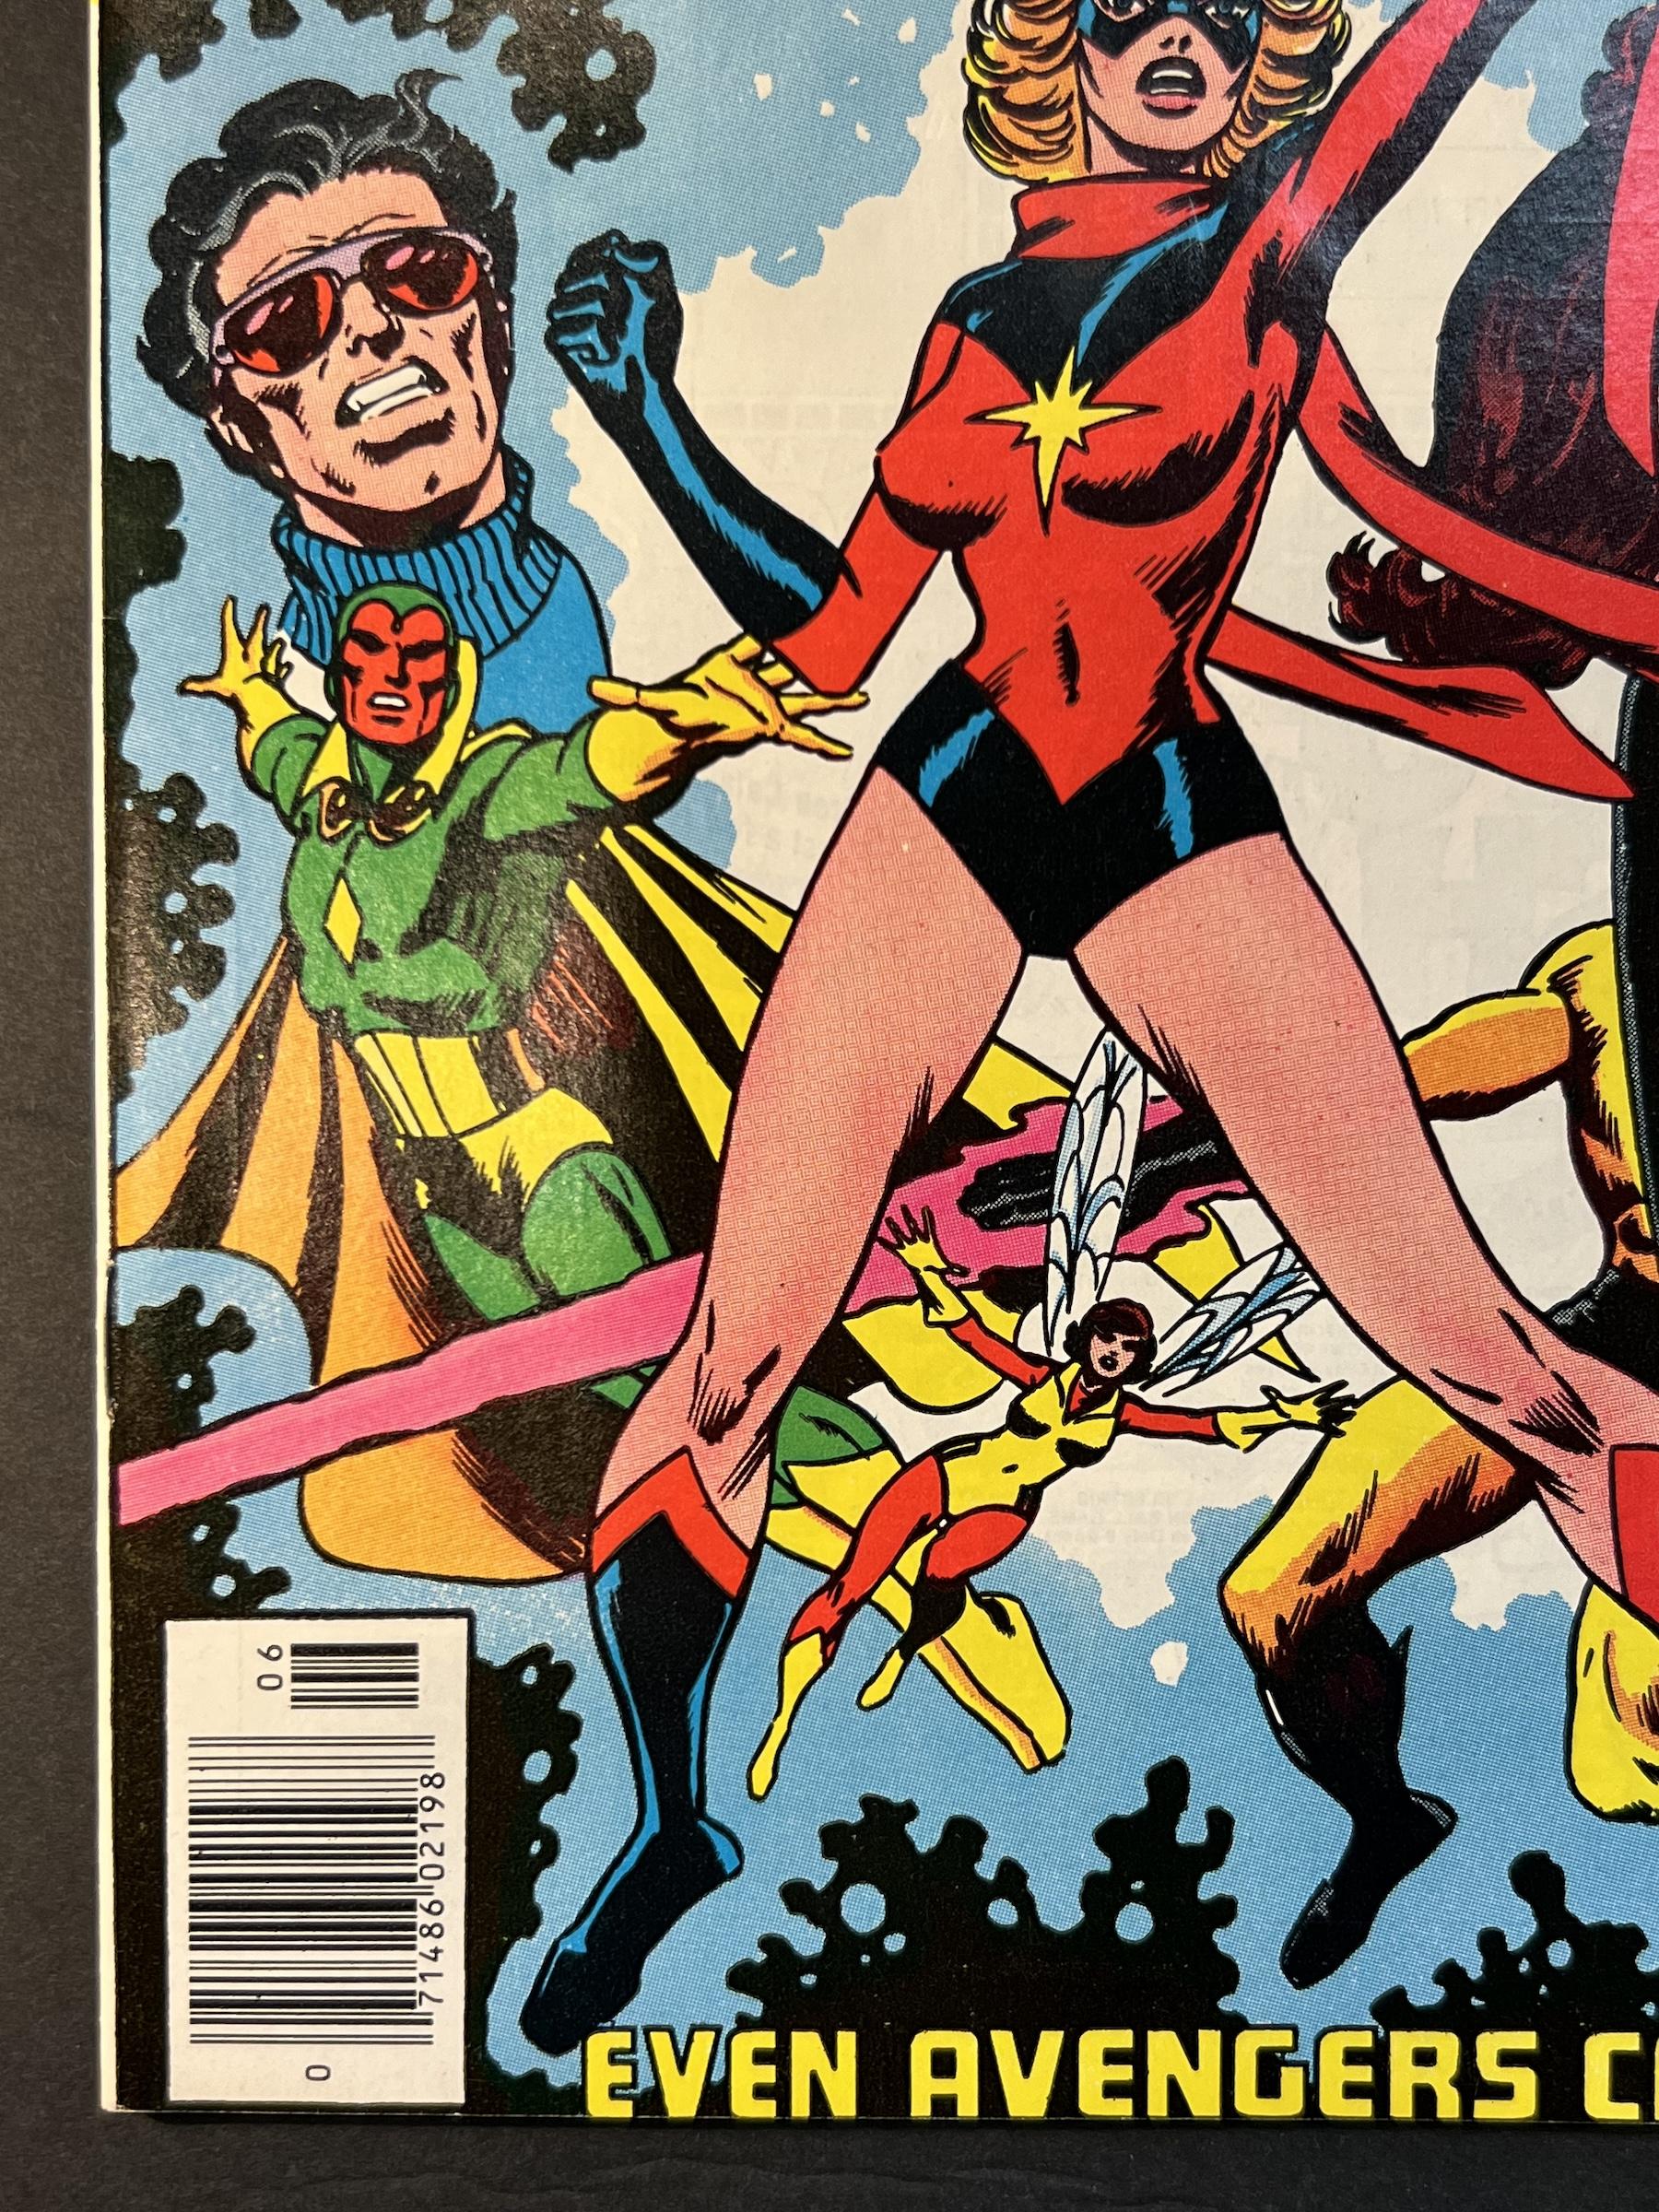 Ms. Marvel #18 Full First Mystique App. Comic Book